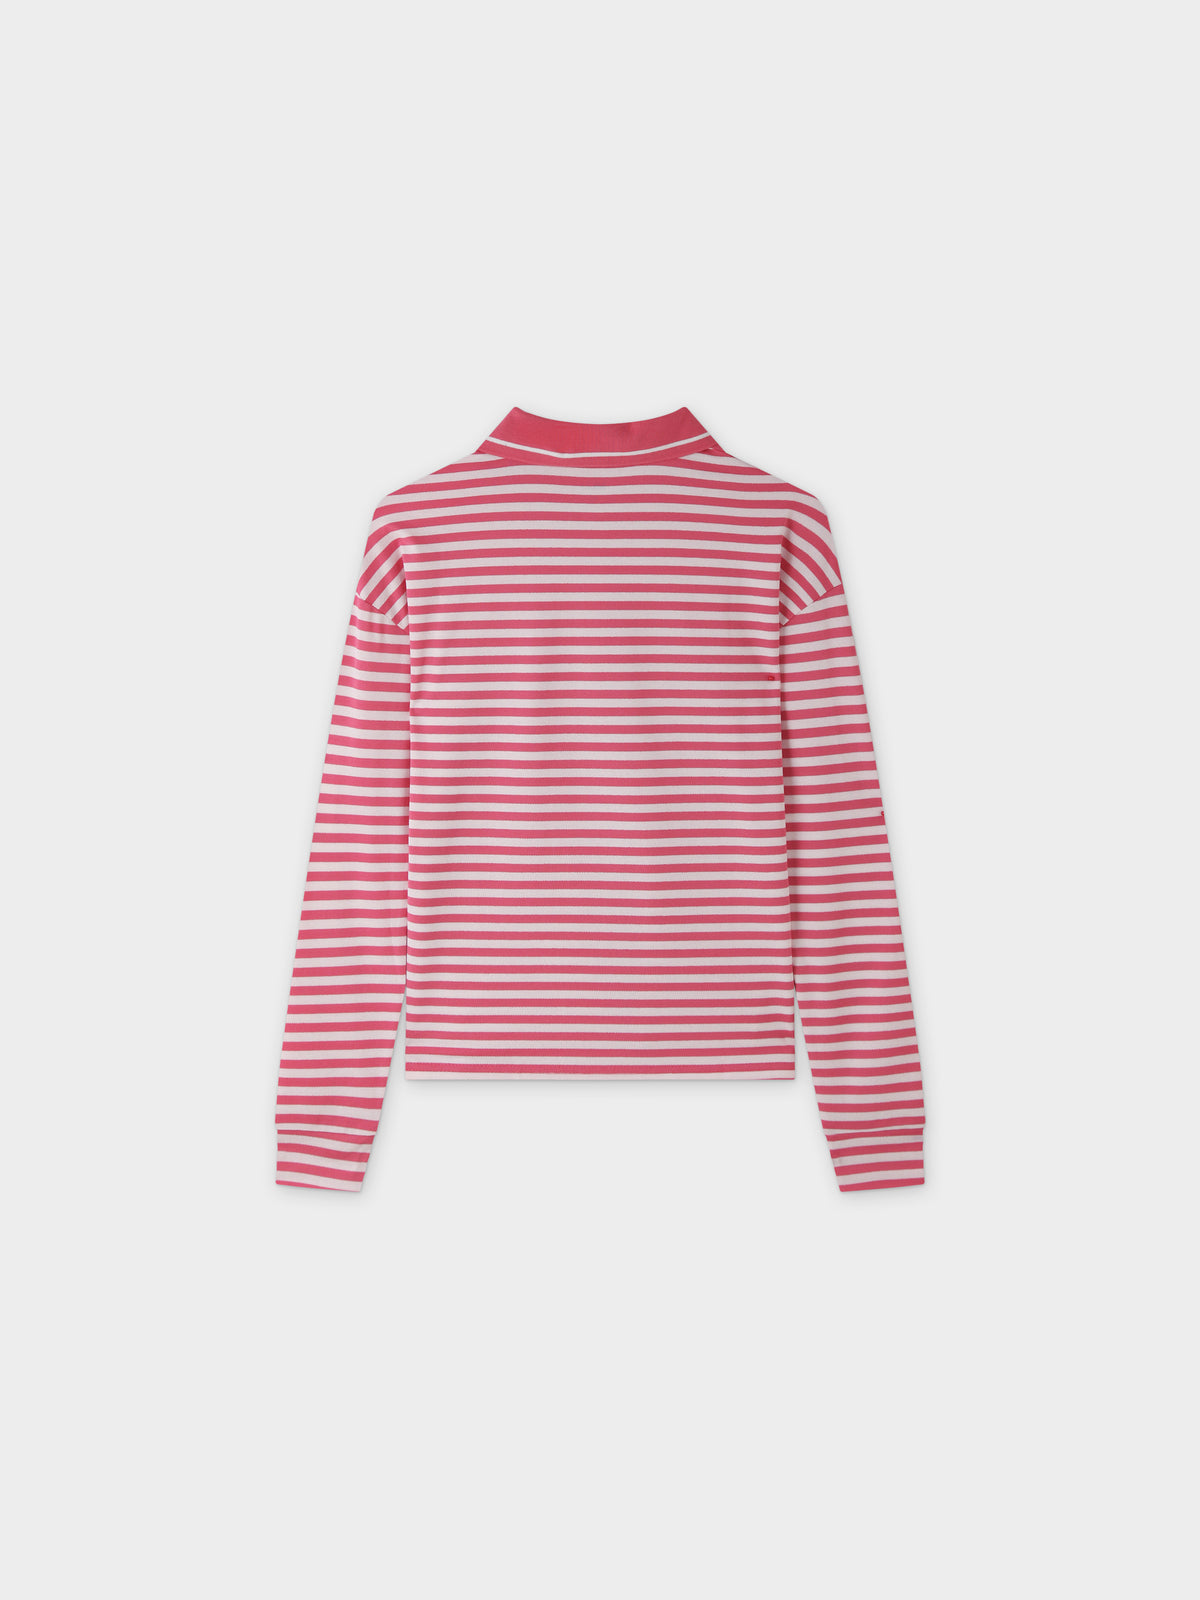 Striped Collar Tee-Pink/White